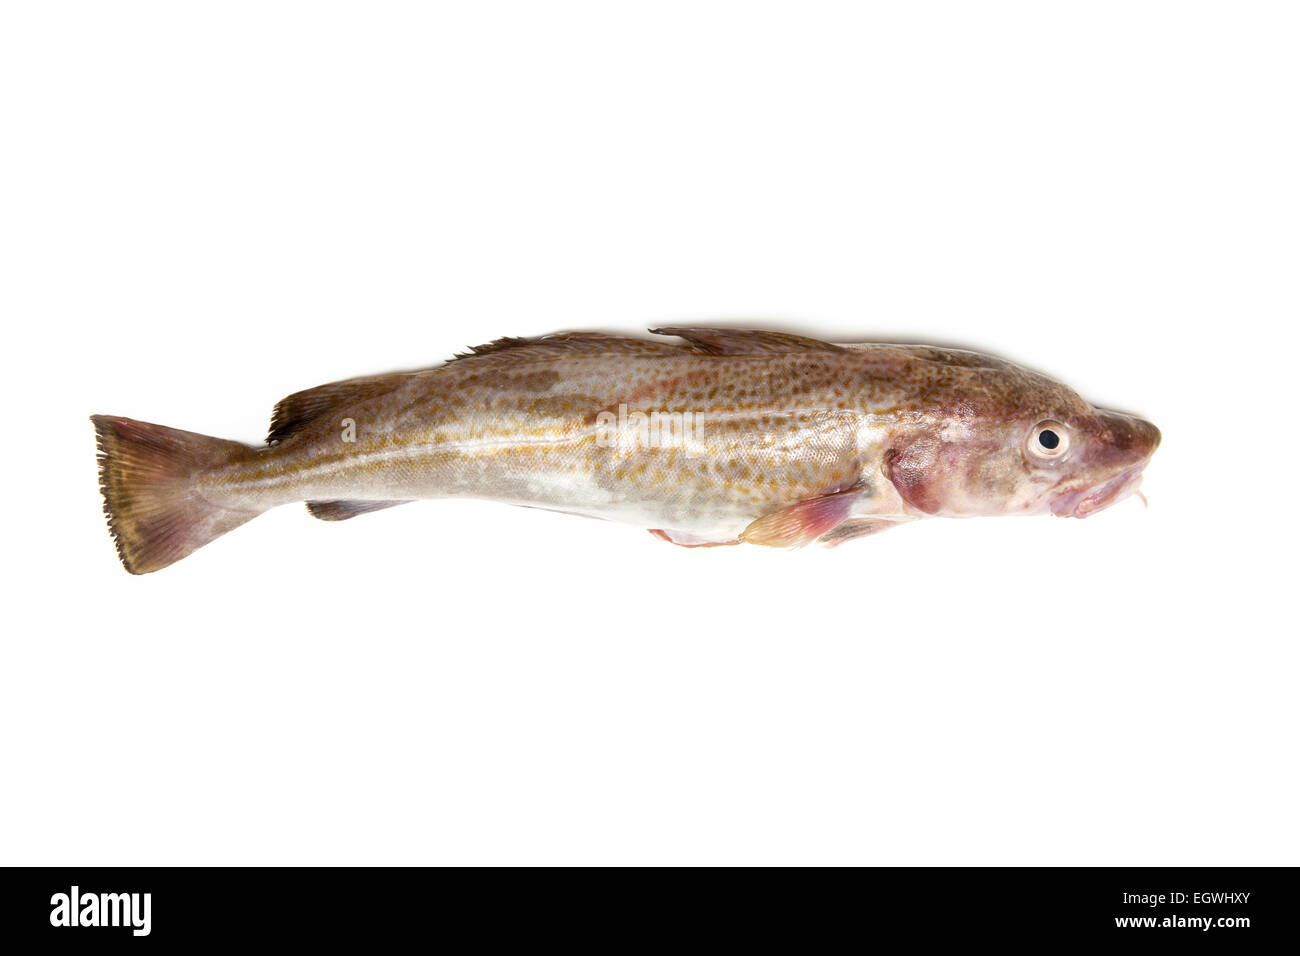 Whole Atlantic cod (Gadus morhua) fish, Isolated on a white studio background. Stock Photo